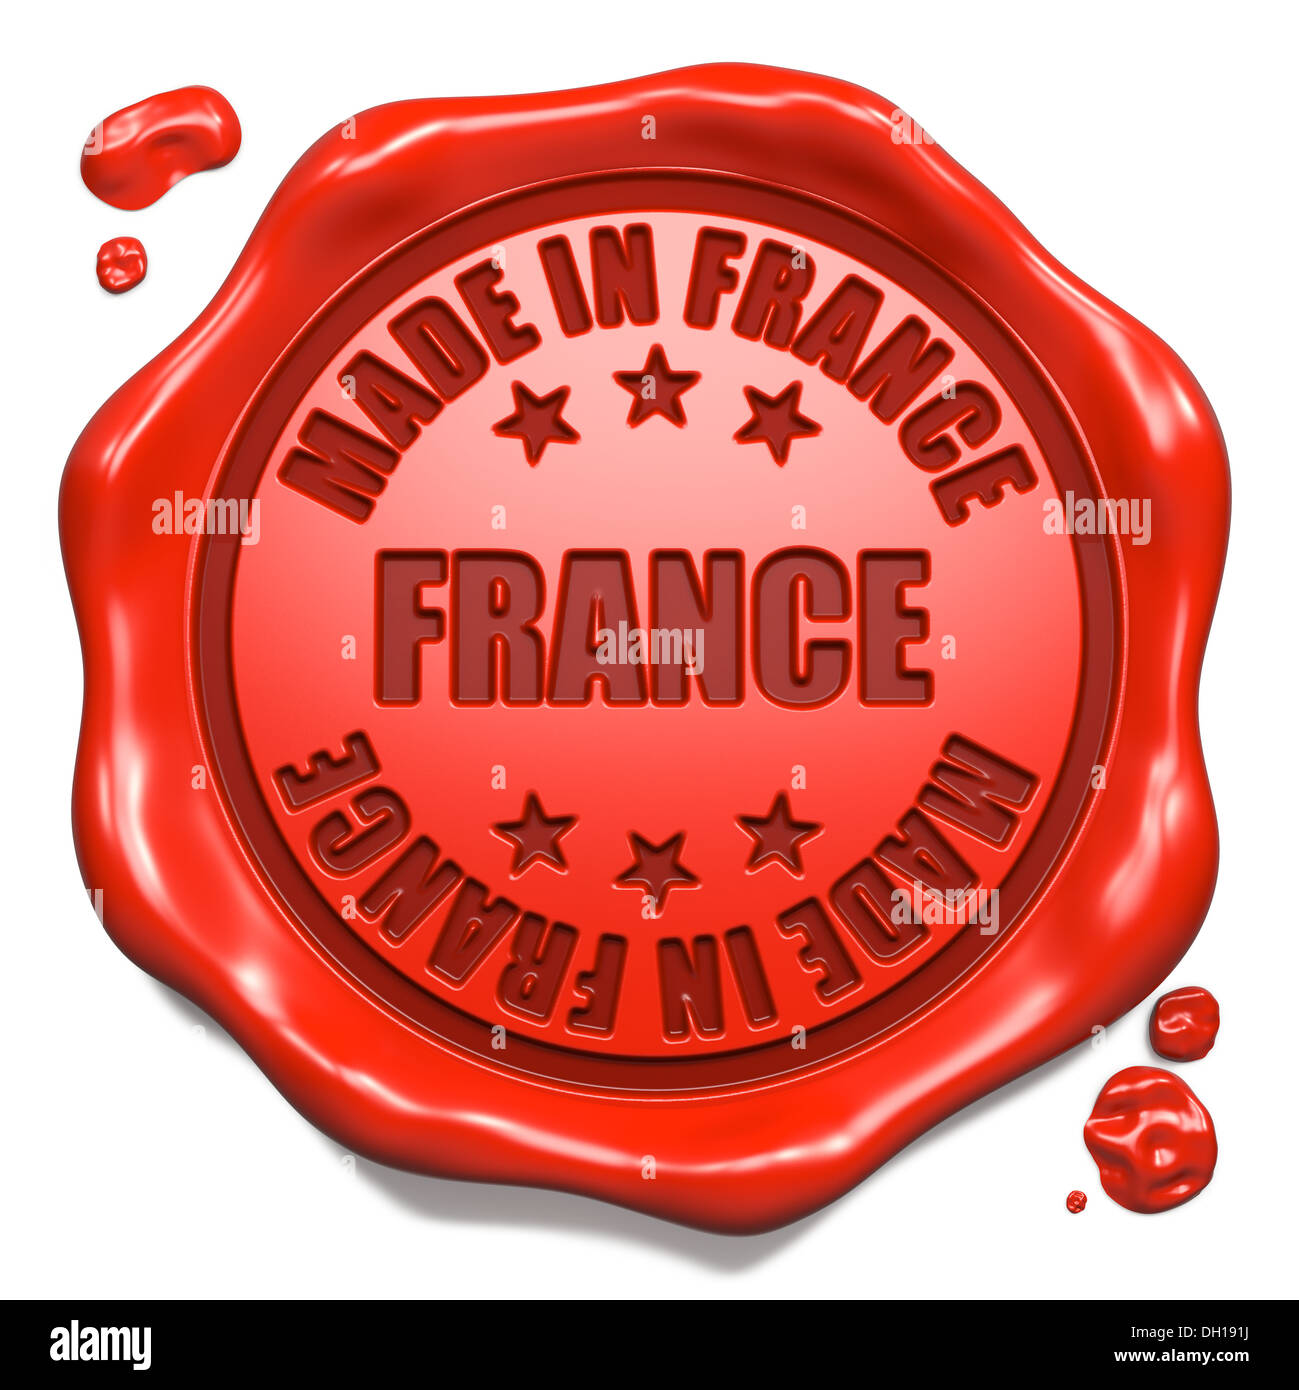 Fabricado en Francia - Sello en sello de cera roja. Foto de stock